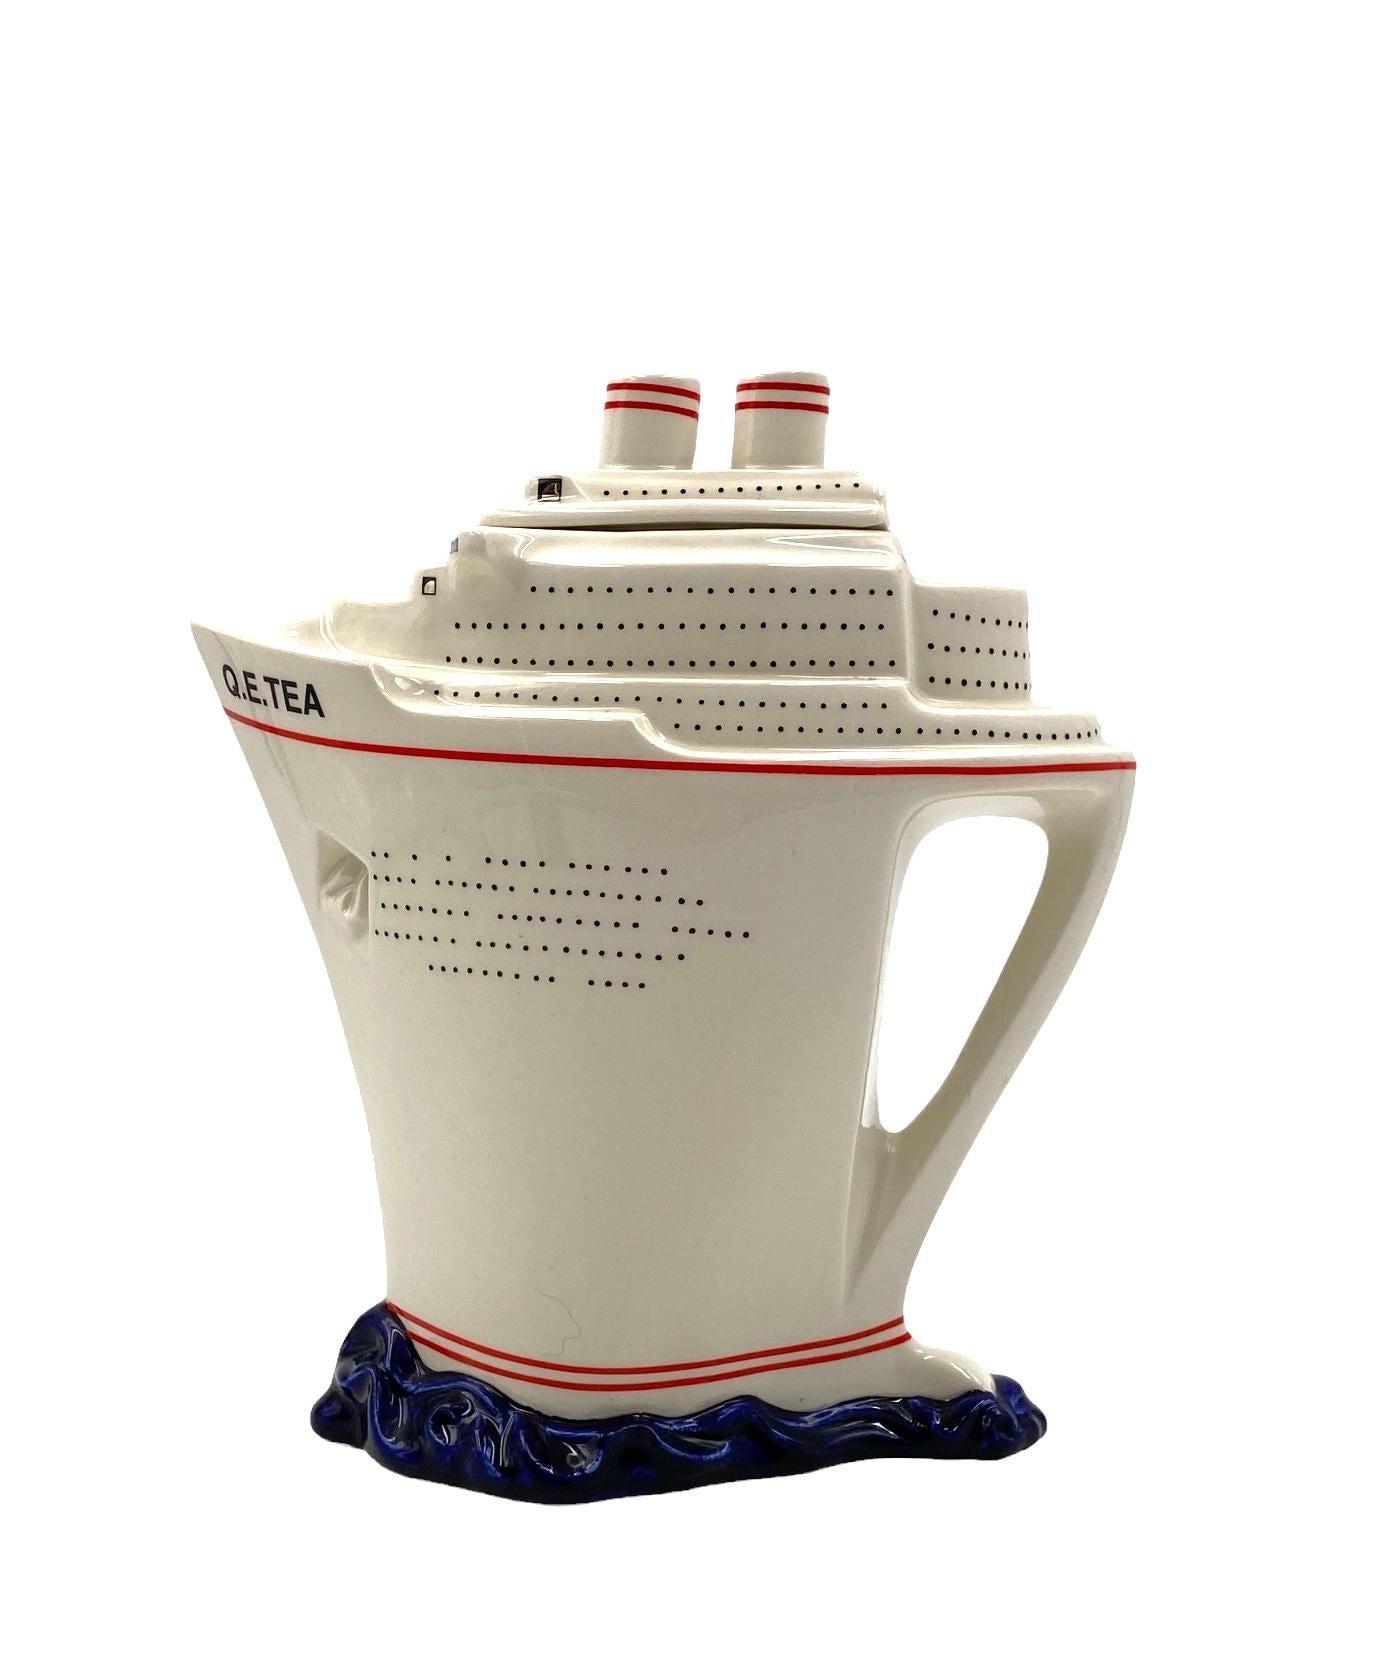 Queen Elizabeth II Cruise Ship Teapot, Paul Cardew, UK, 2000s For Sale 3